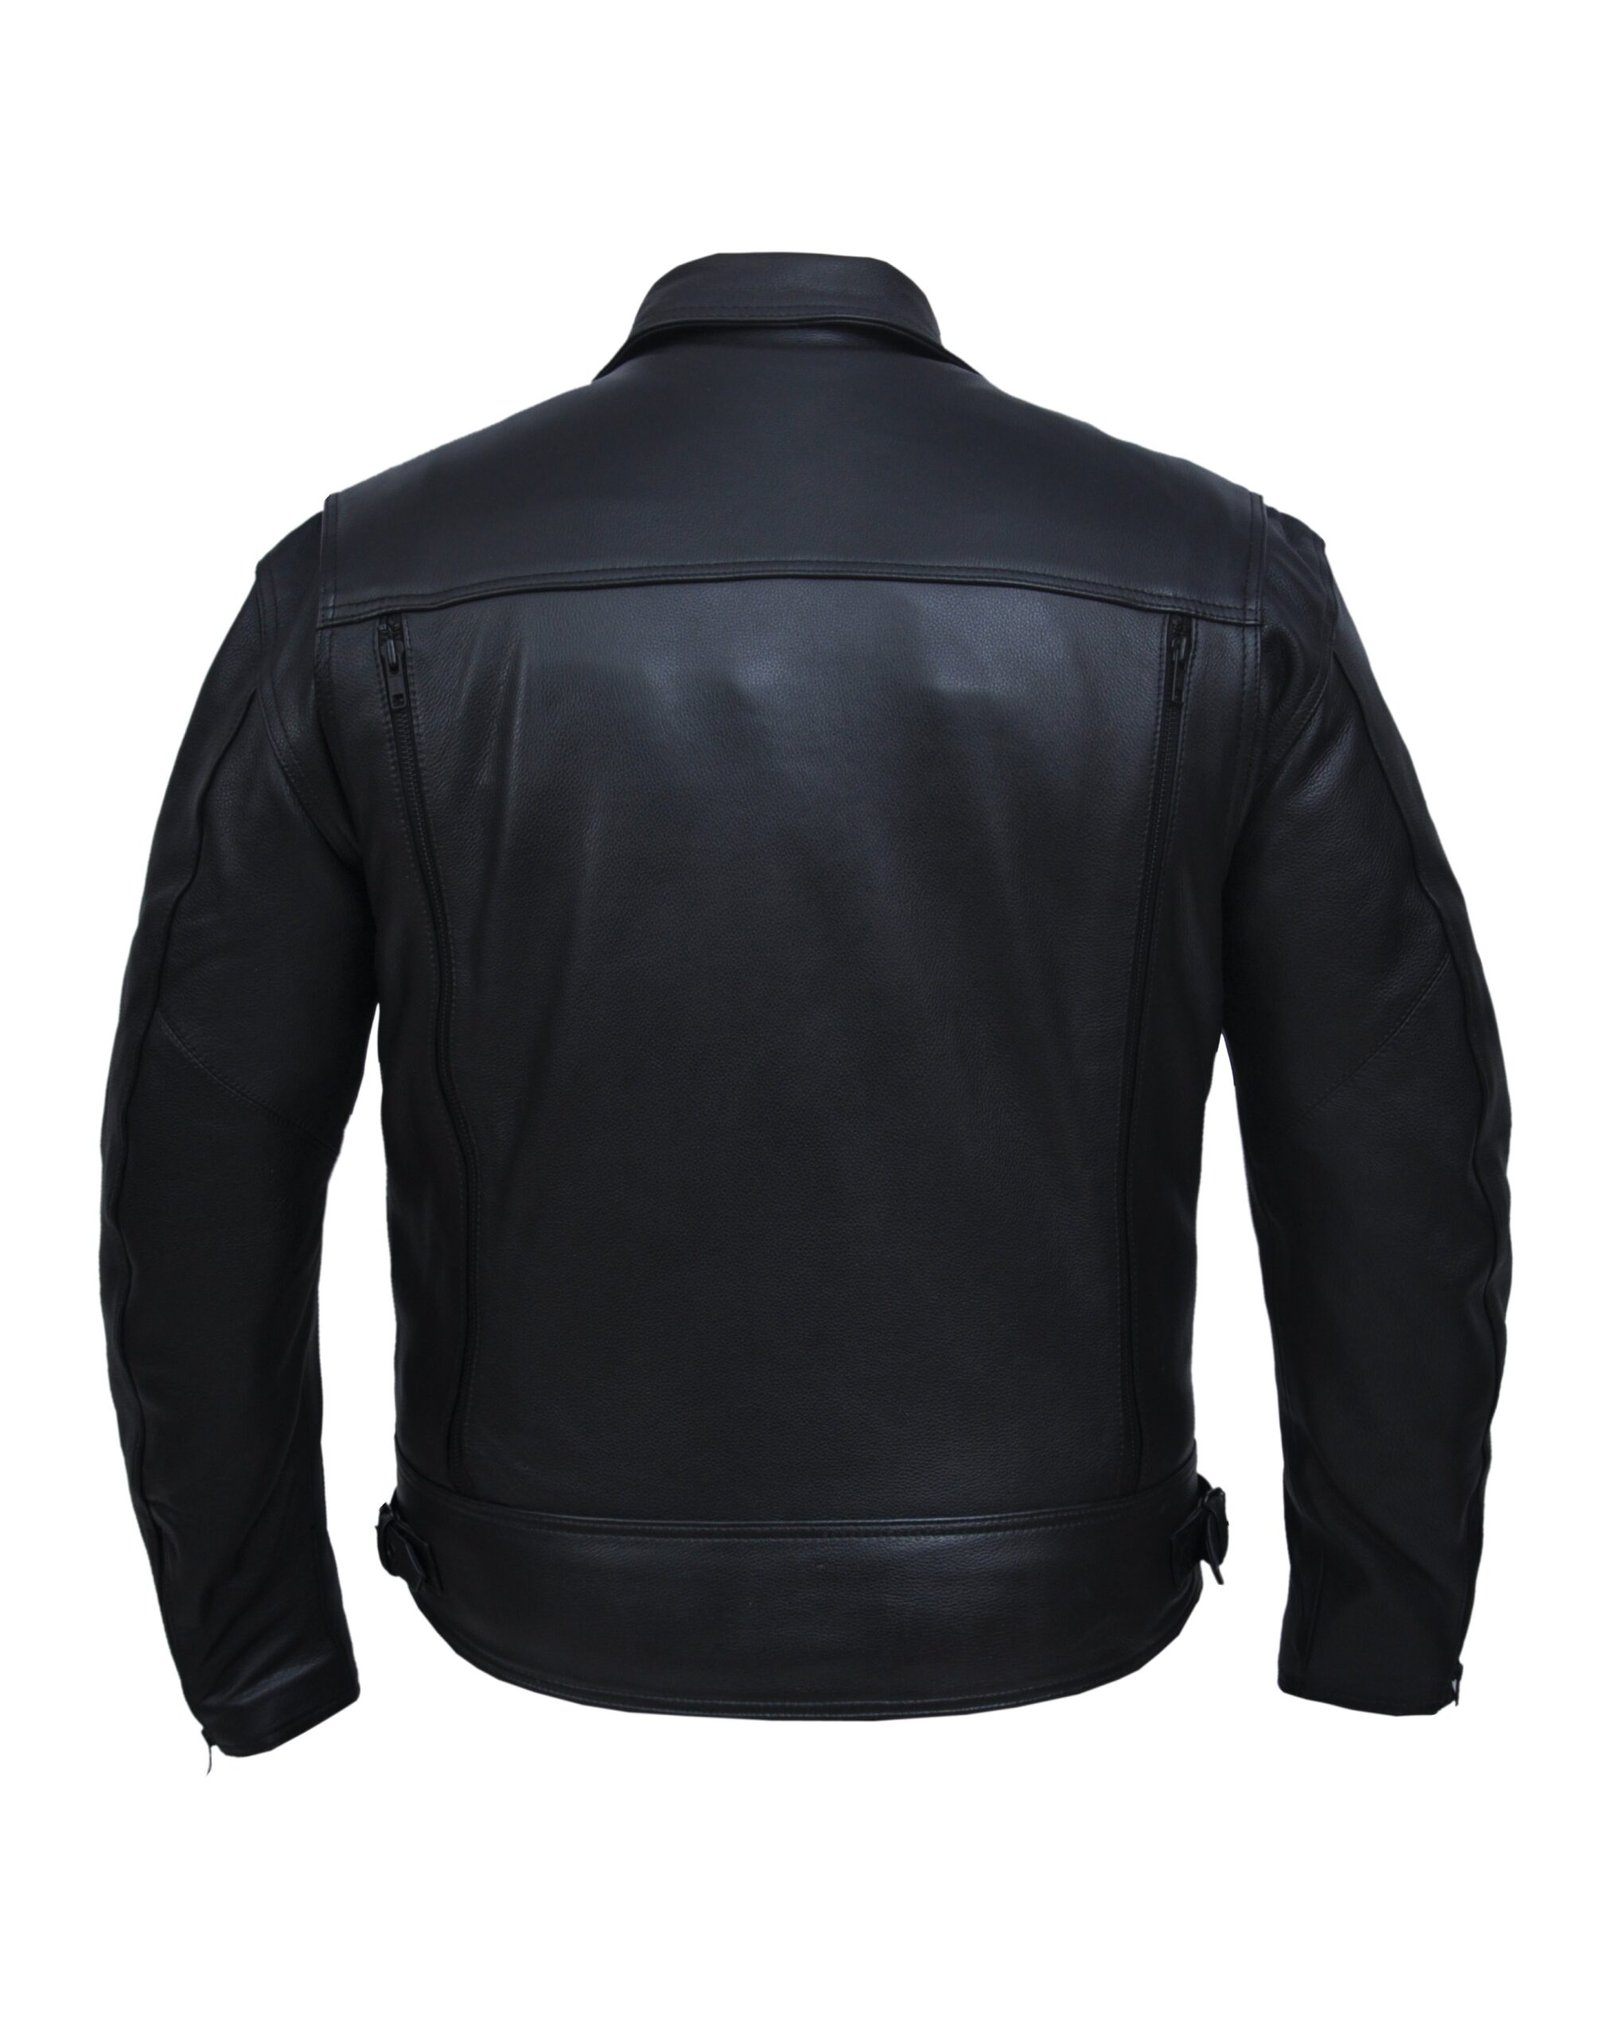 Ultra Leather Motorcycle Jacket - Men's - Biker - 341-CW-UN